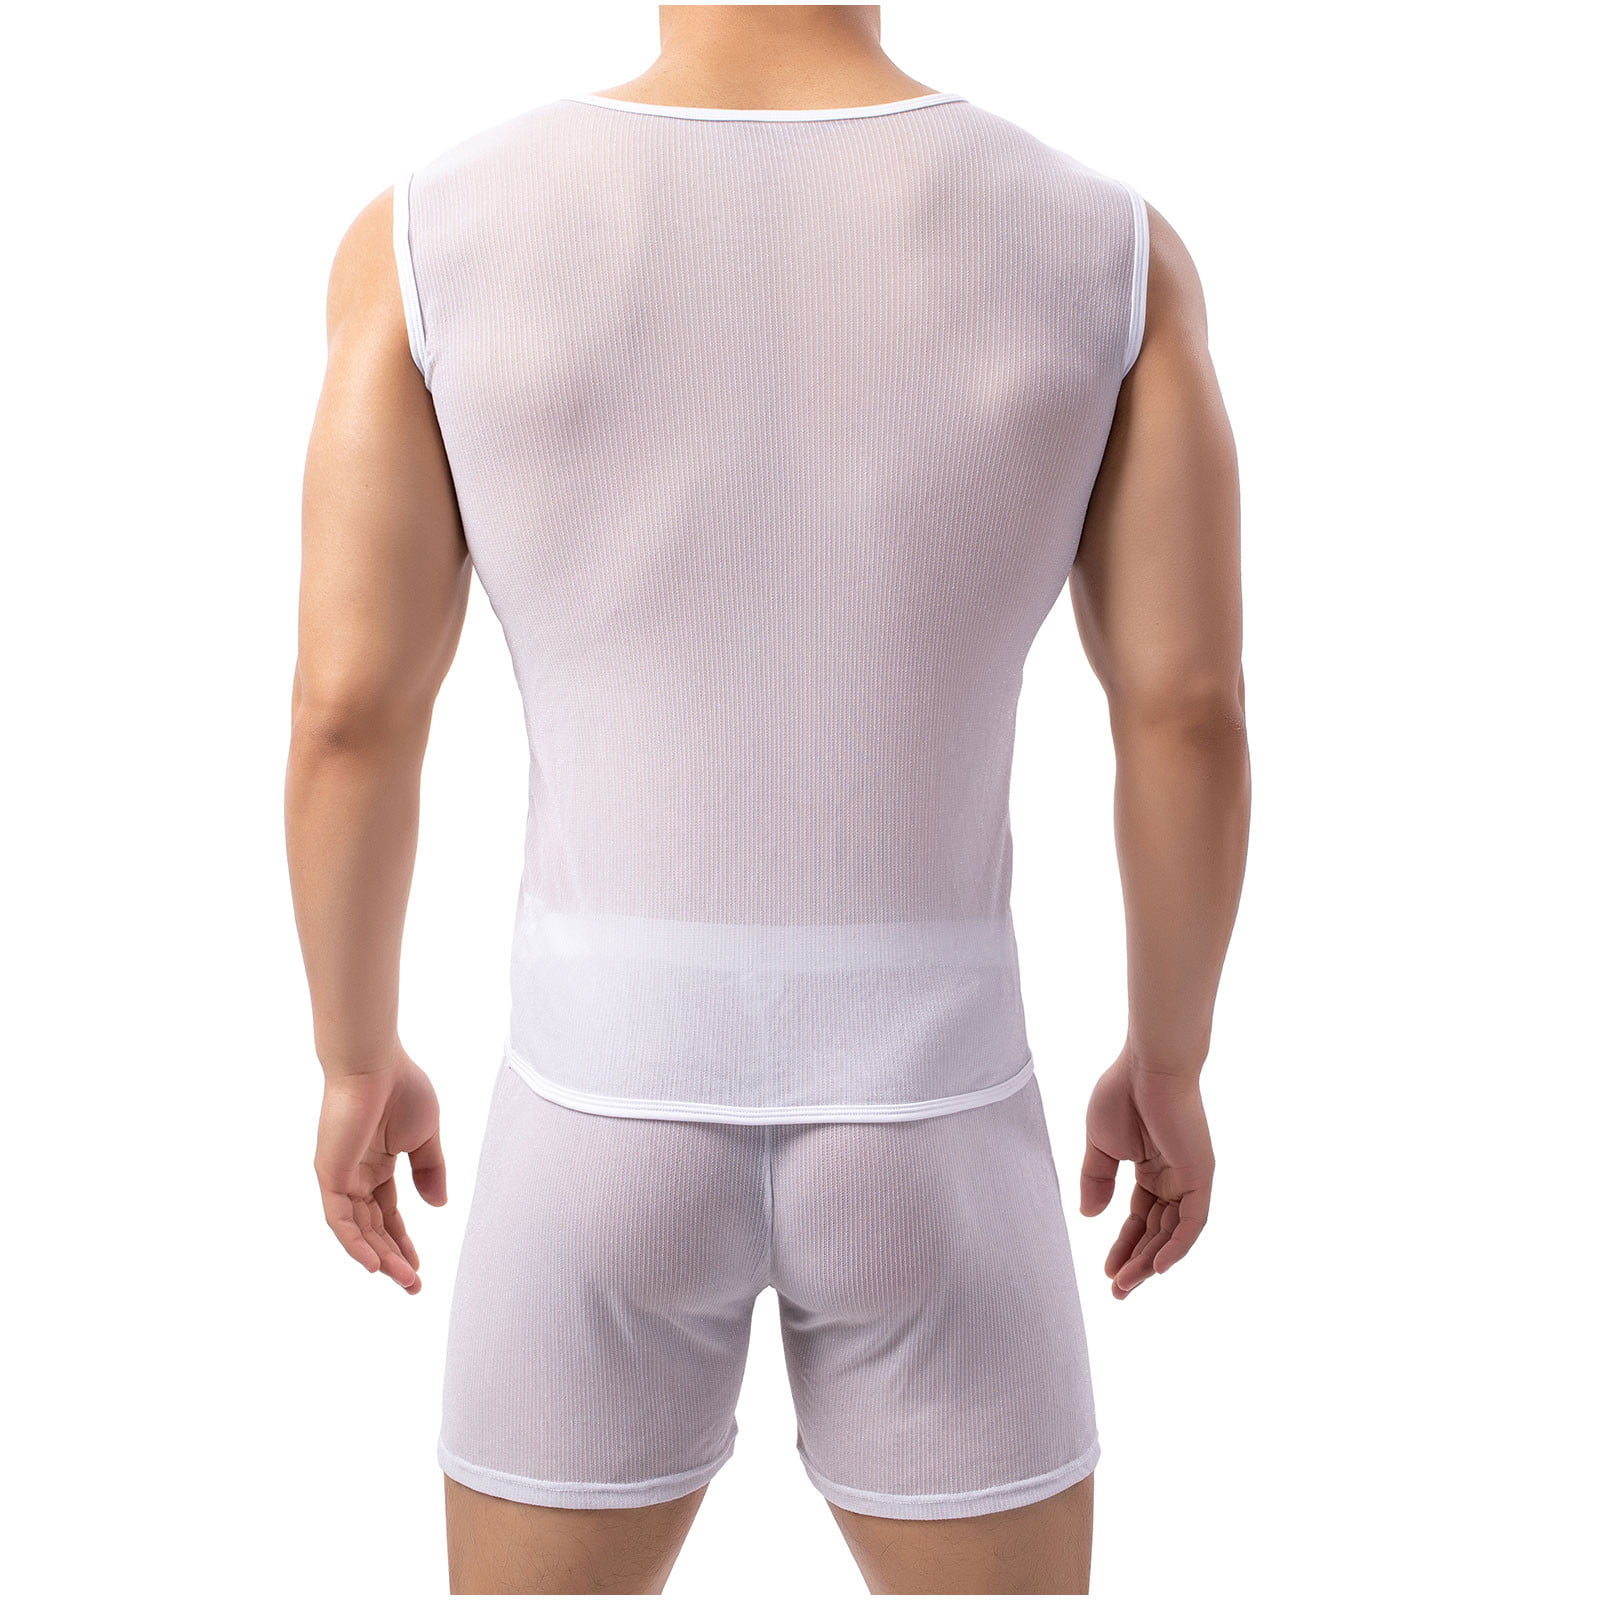 Simplmasygenix Mens Summer Clearance Althleisure Sleeveless Tank Top Men  Casual Round Neck Short Sleeve Round Neck Pullover Underwear Perspective